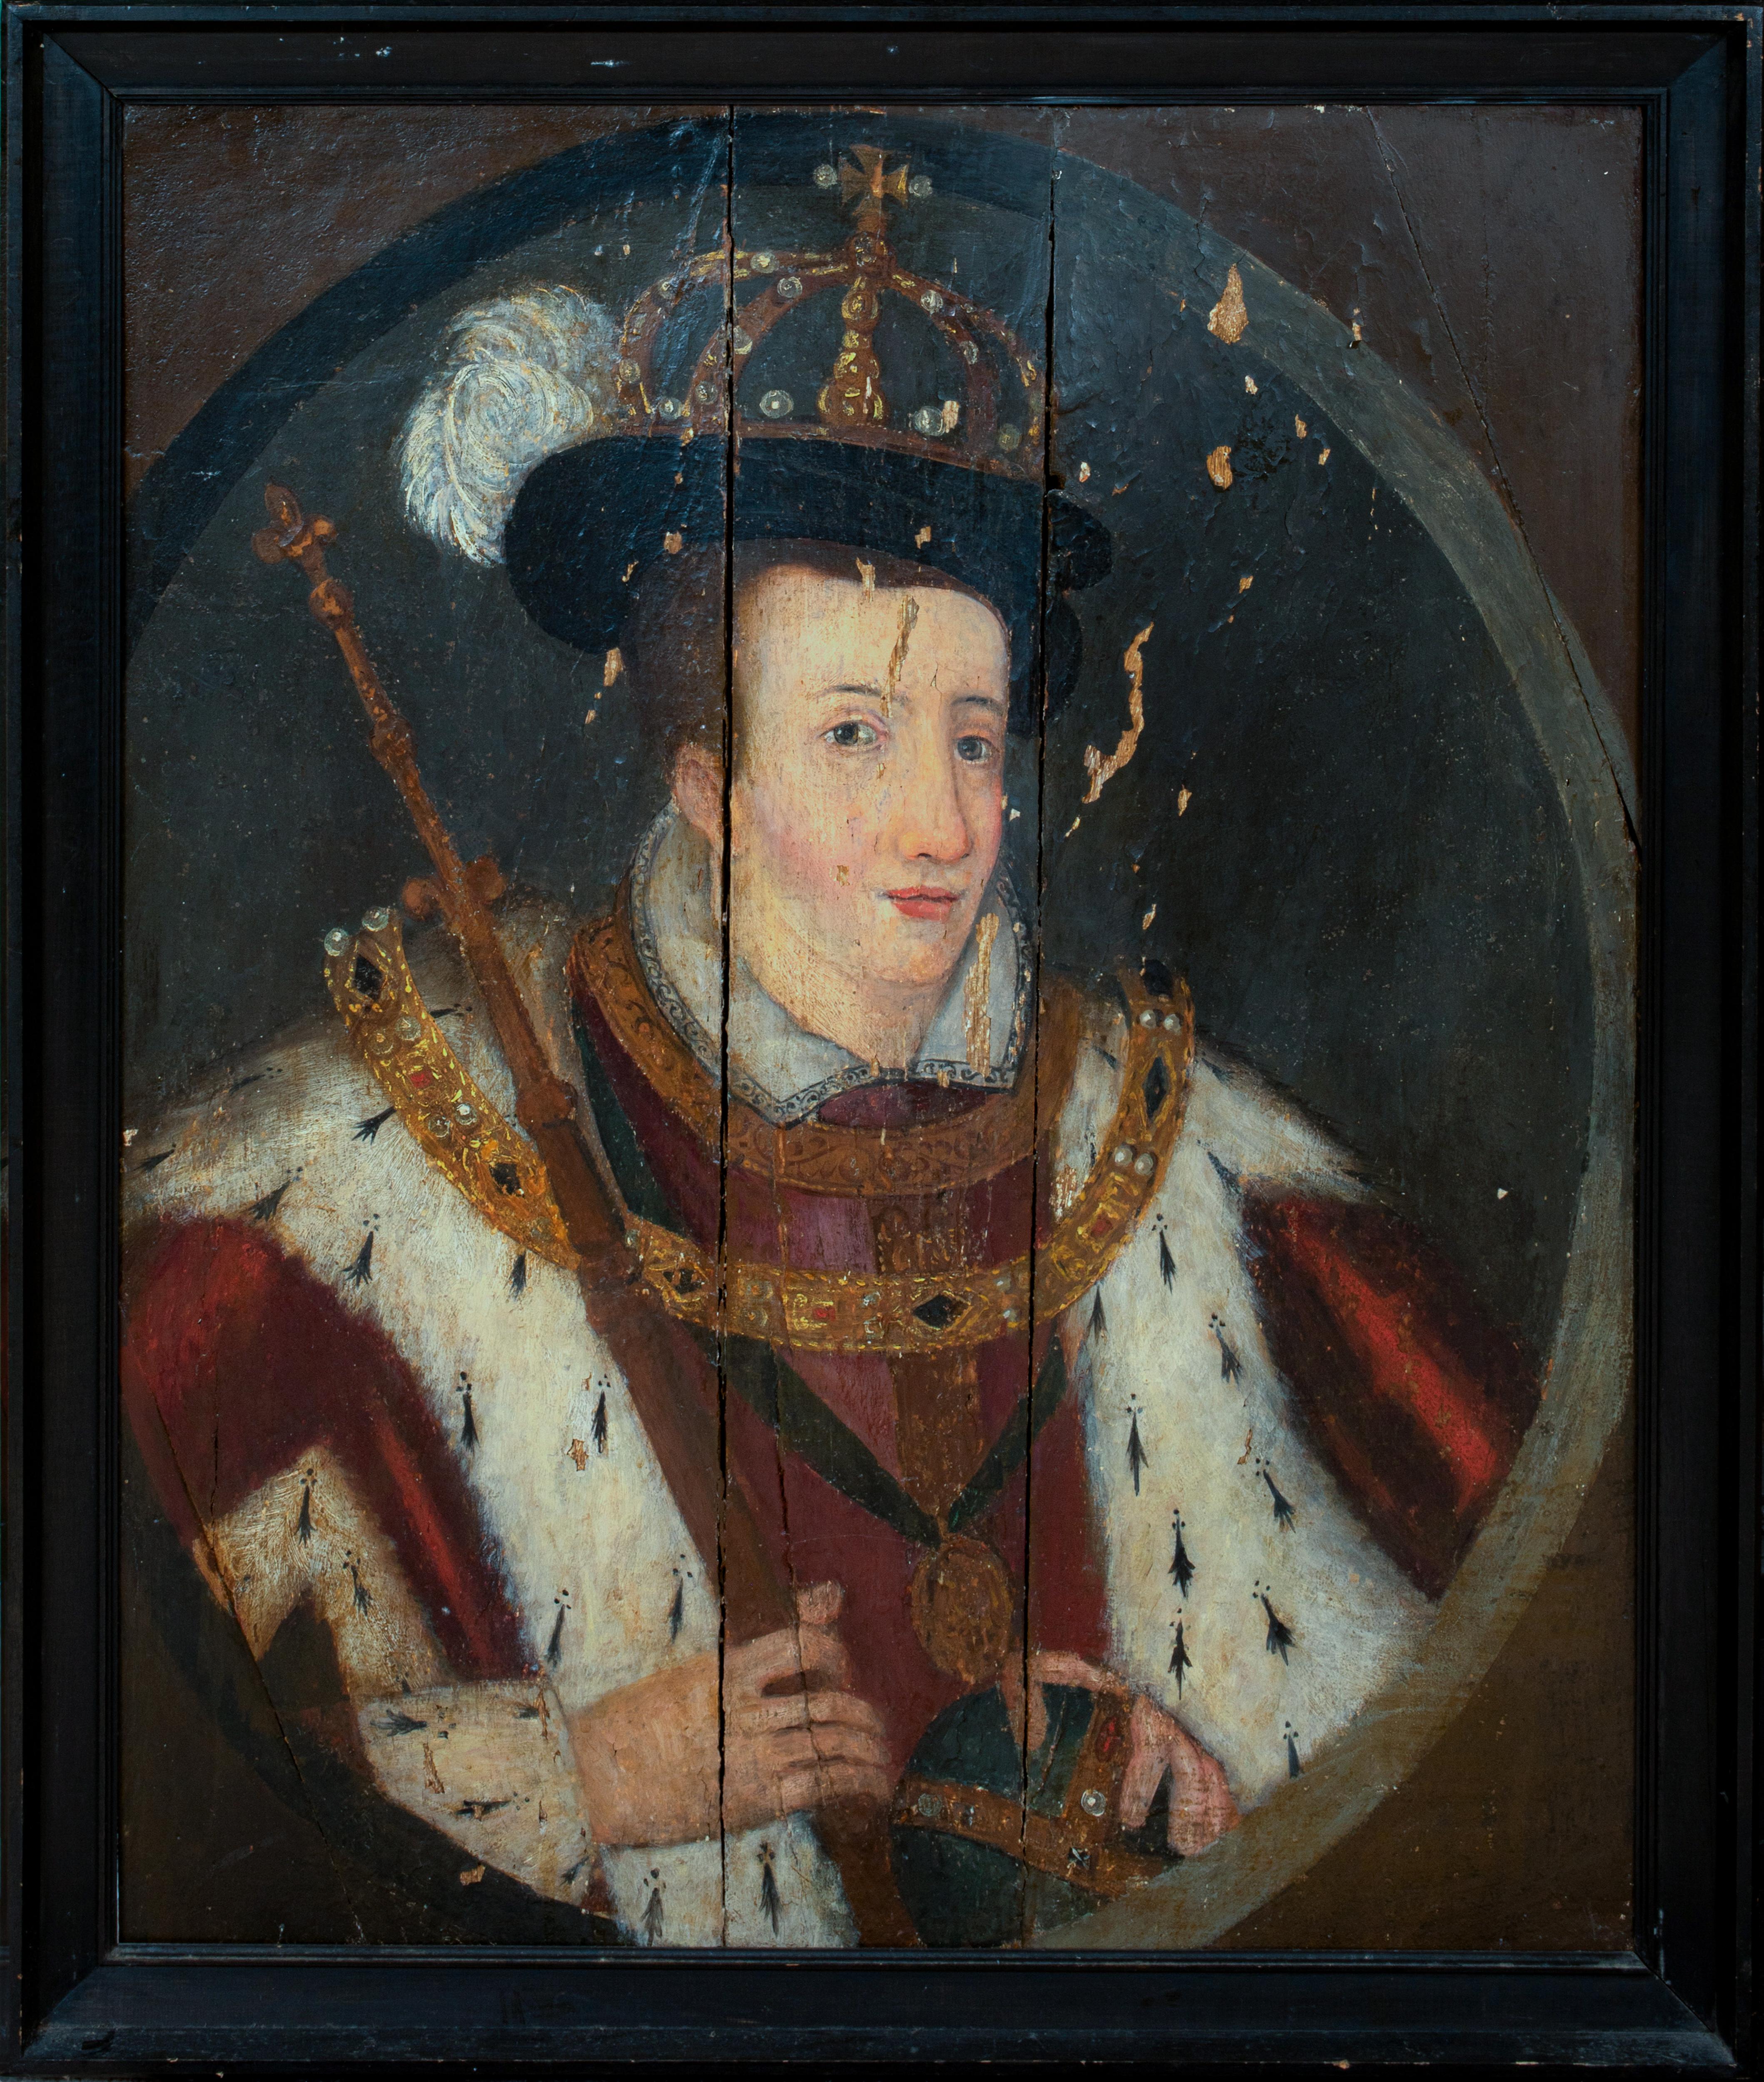 Unknown Portrait Painting - Coronation Portrait Of King Edward VI (1537-1553) as King Of England & Ireland